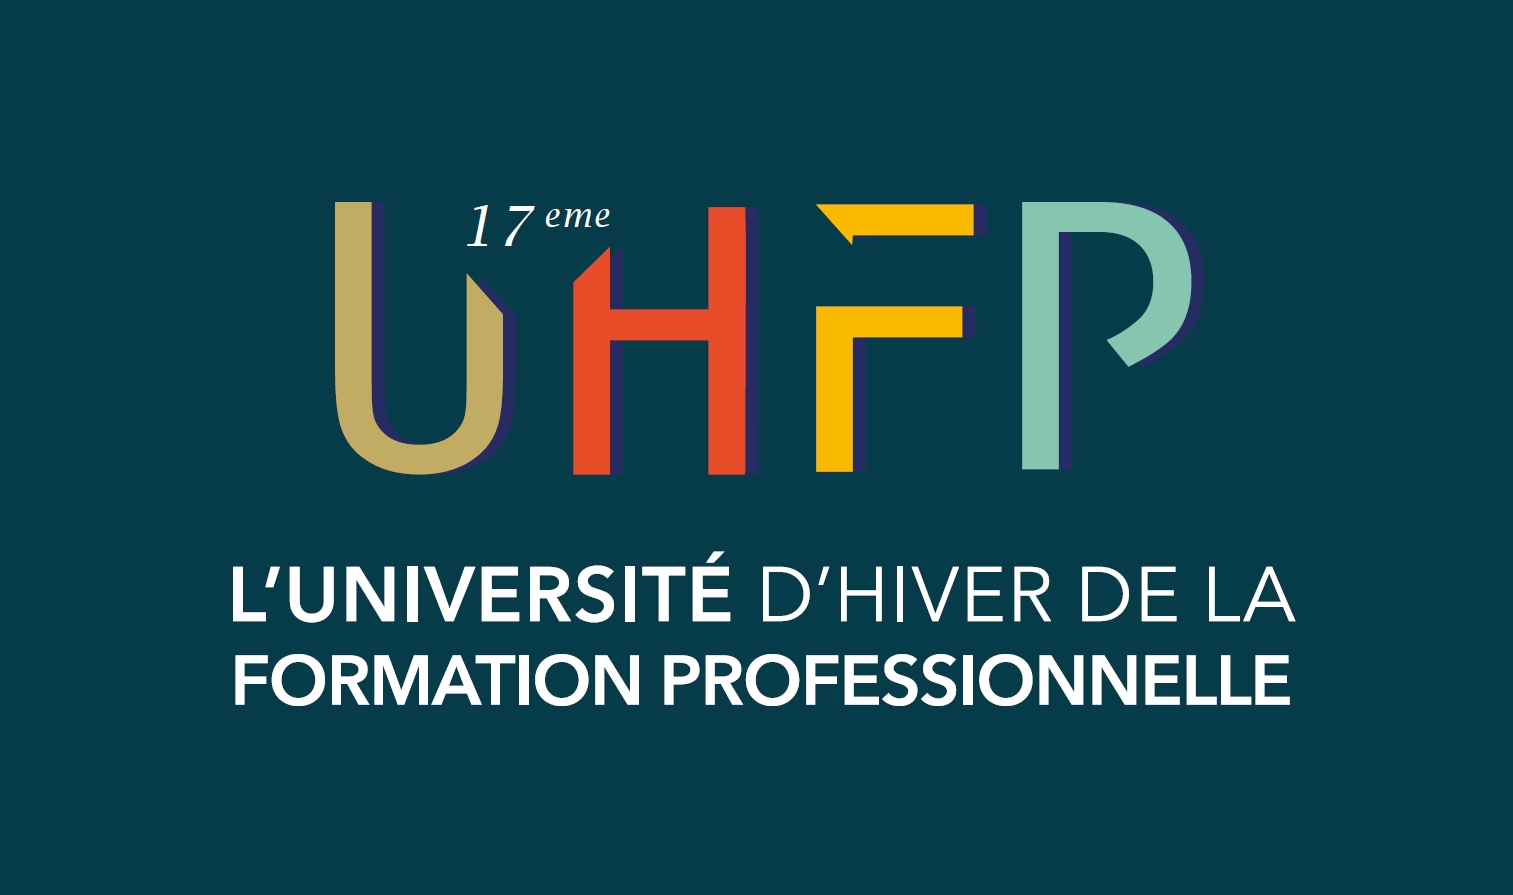 Logo UHFP 2020